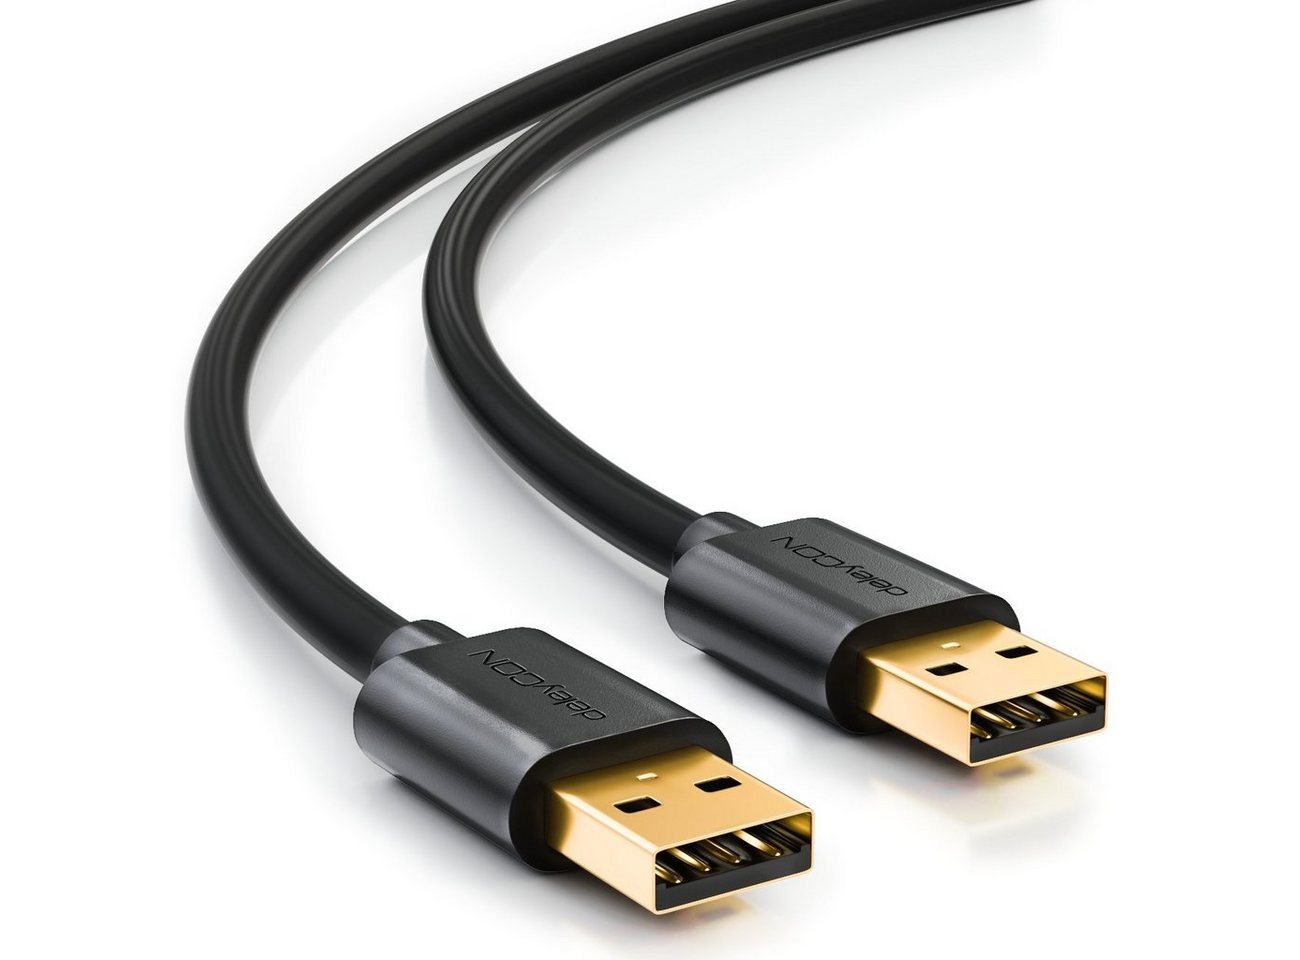 deleyCON deleyCON 0,5m USB 2.0 Datenkabel - USB A-Stecker zu USB A-Stecker USB-Kabel von deleyCON